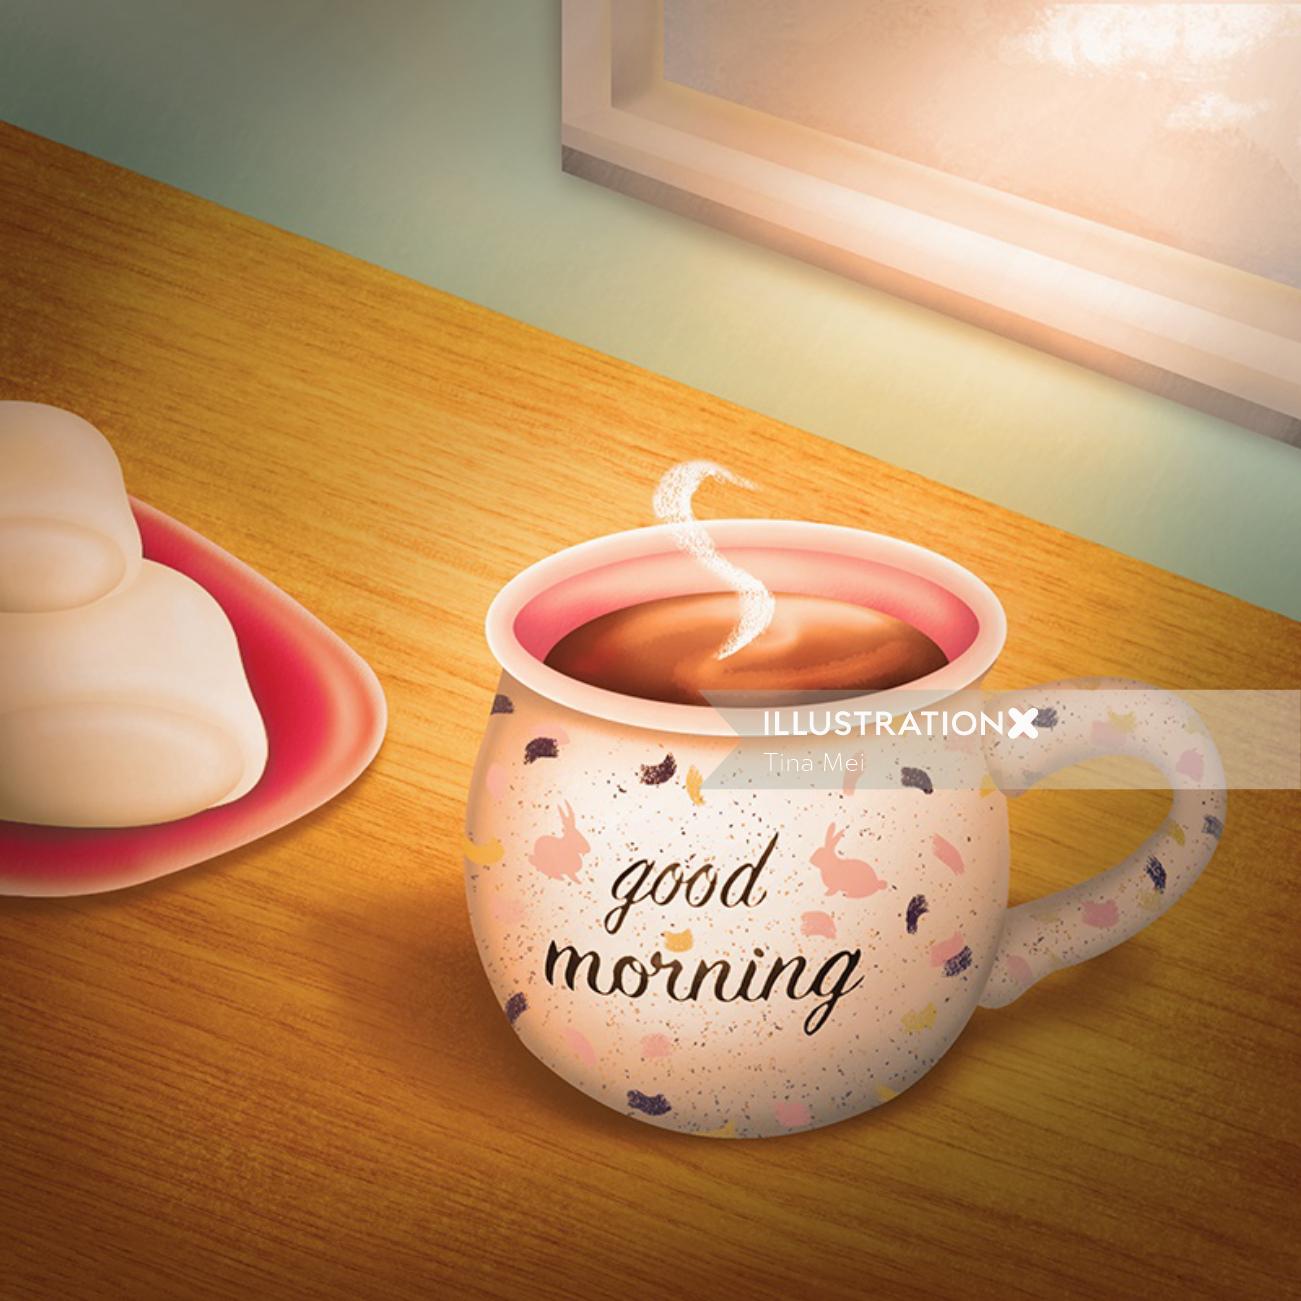 good morning, good morning illustration, coffee illustration, drink illustration, food illustration,